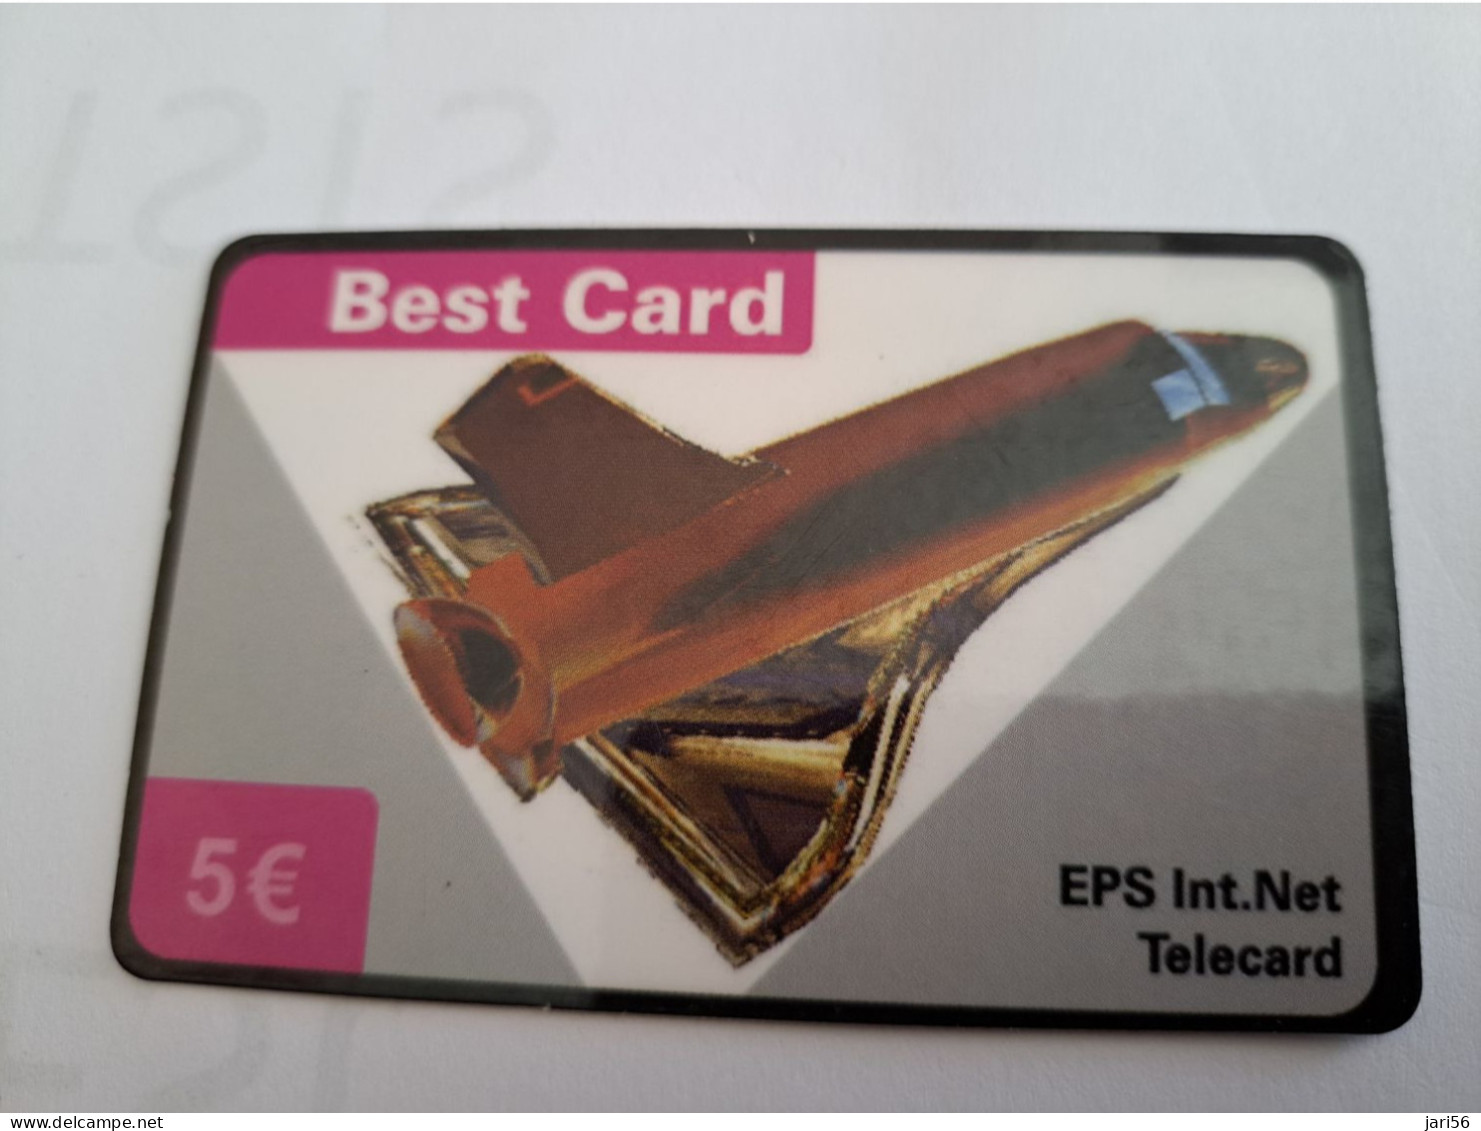 DUITSLAND/GERMANY  € 5,- / BEST CARD/ SPACE SHUTTLE   ON CARD        Fine Used  PREPAID  **16533** - [2] Prepaid